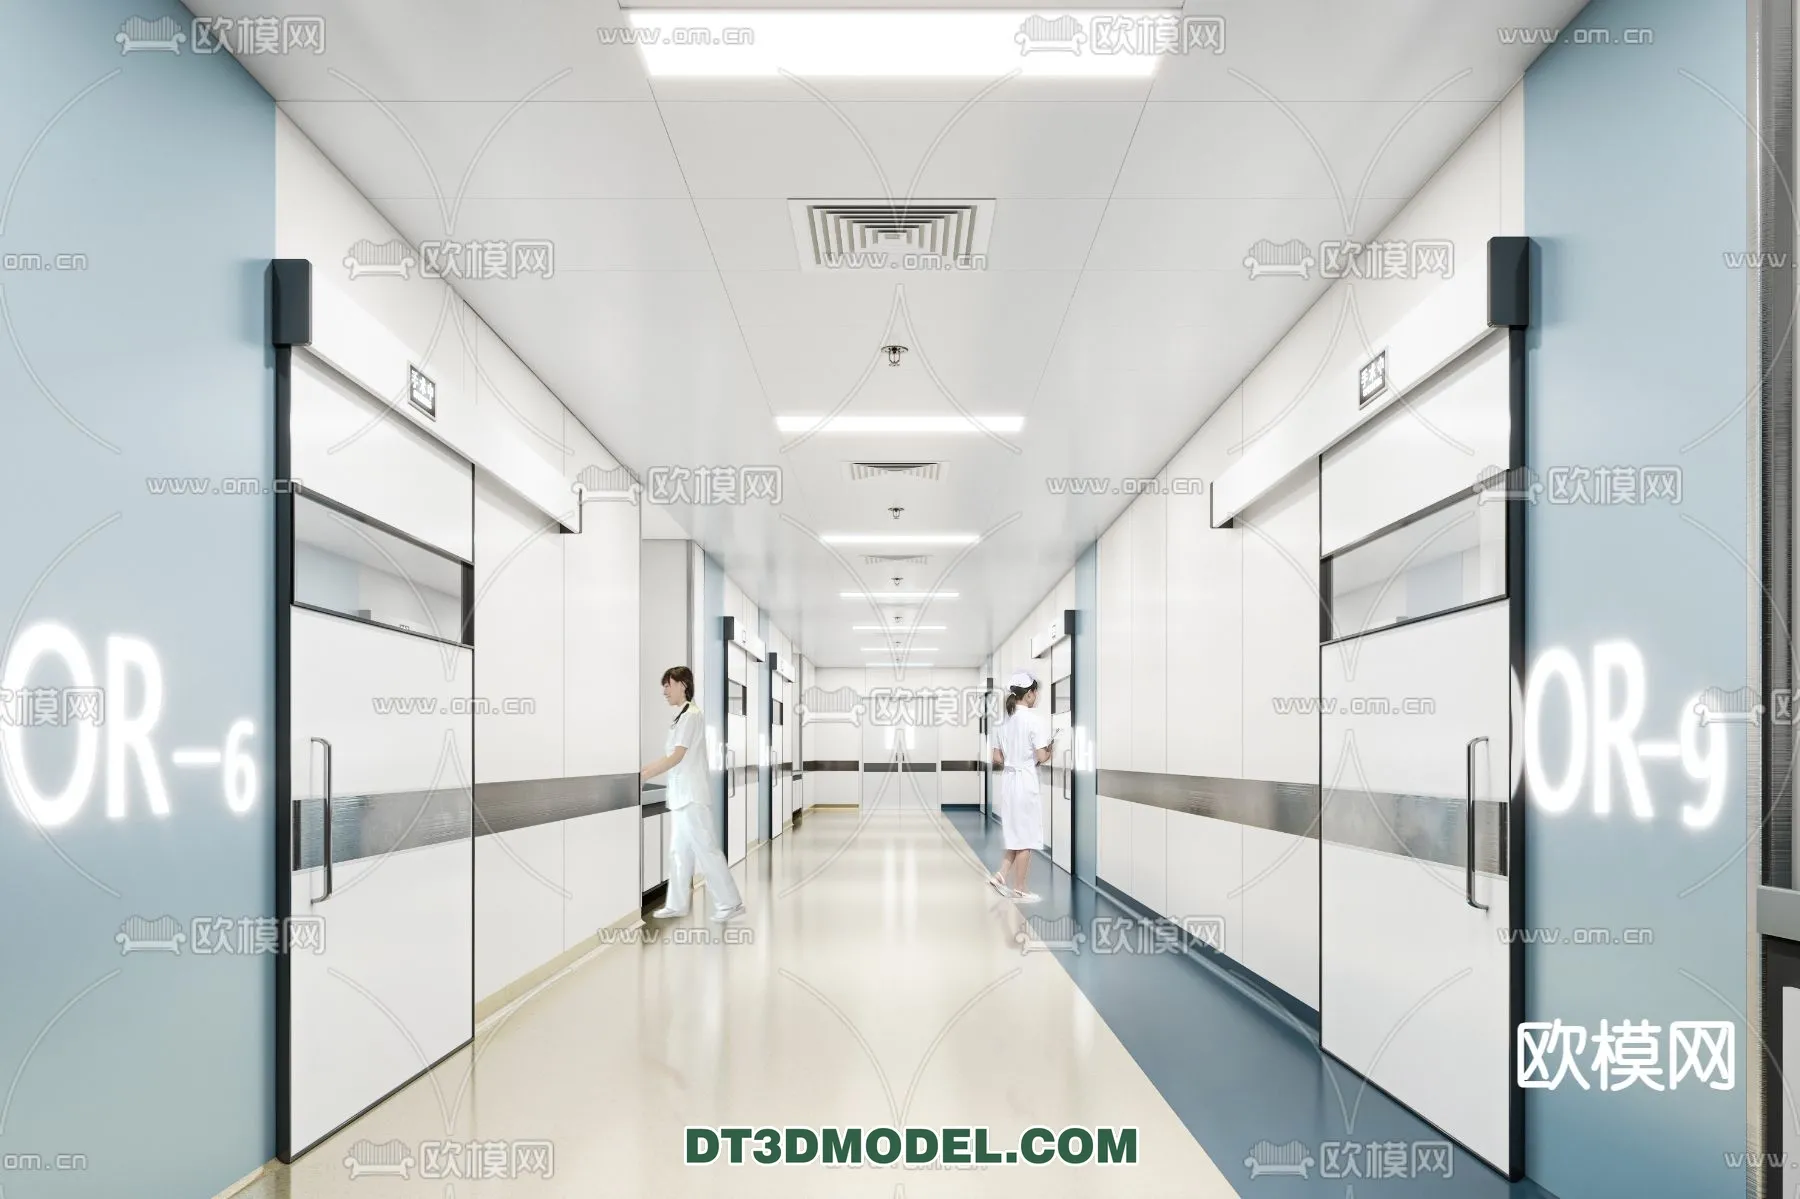 HOSPITAL 3D SCENES – MODERN – 0137